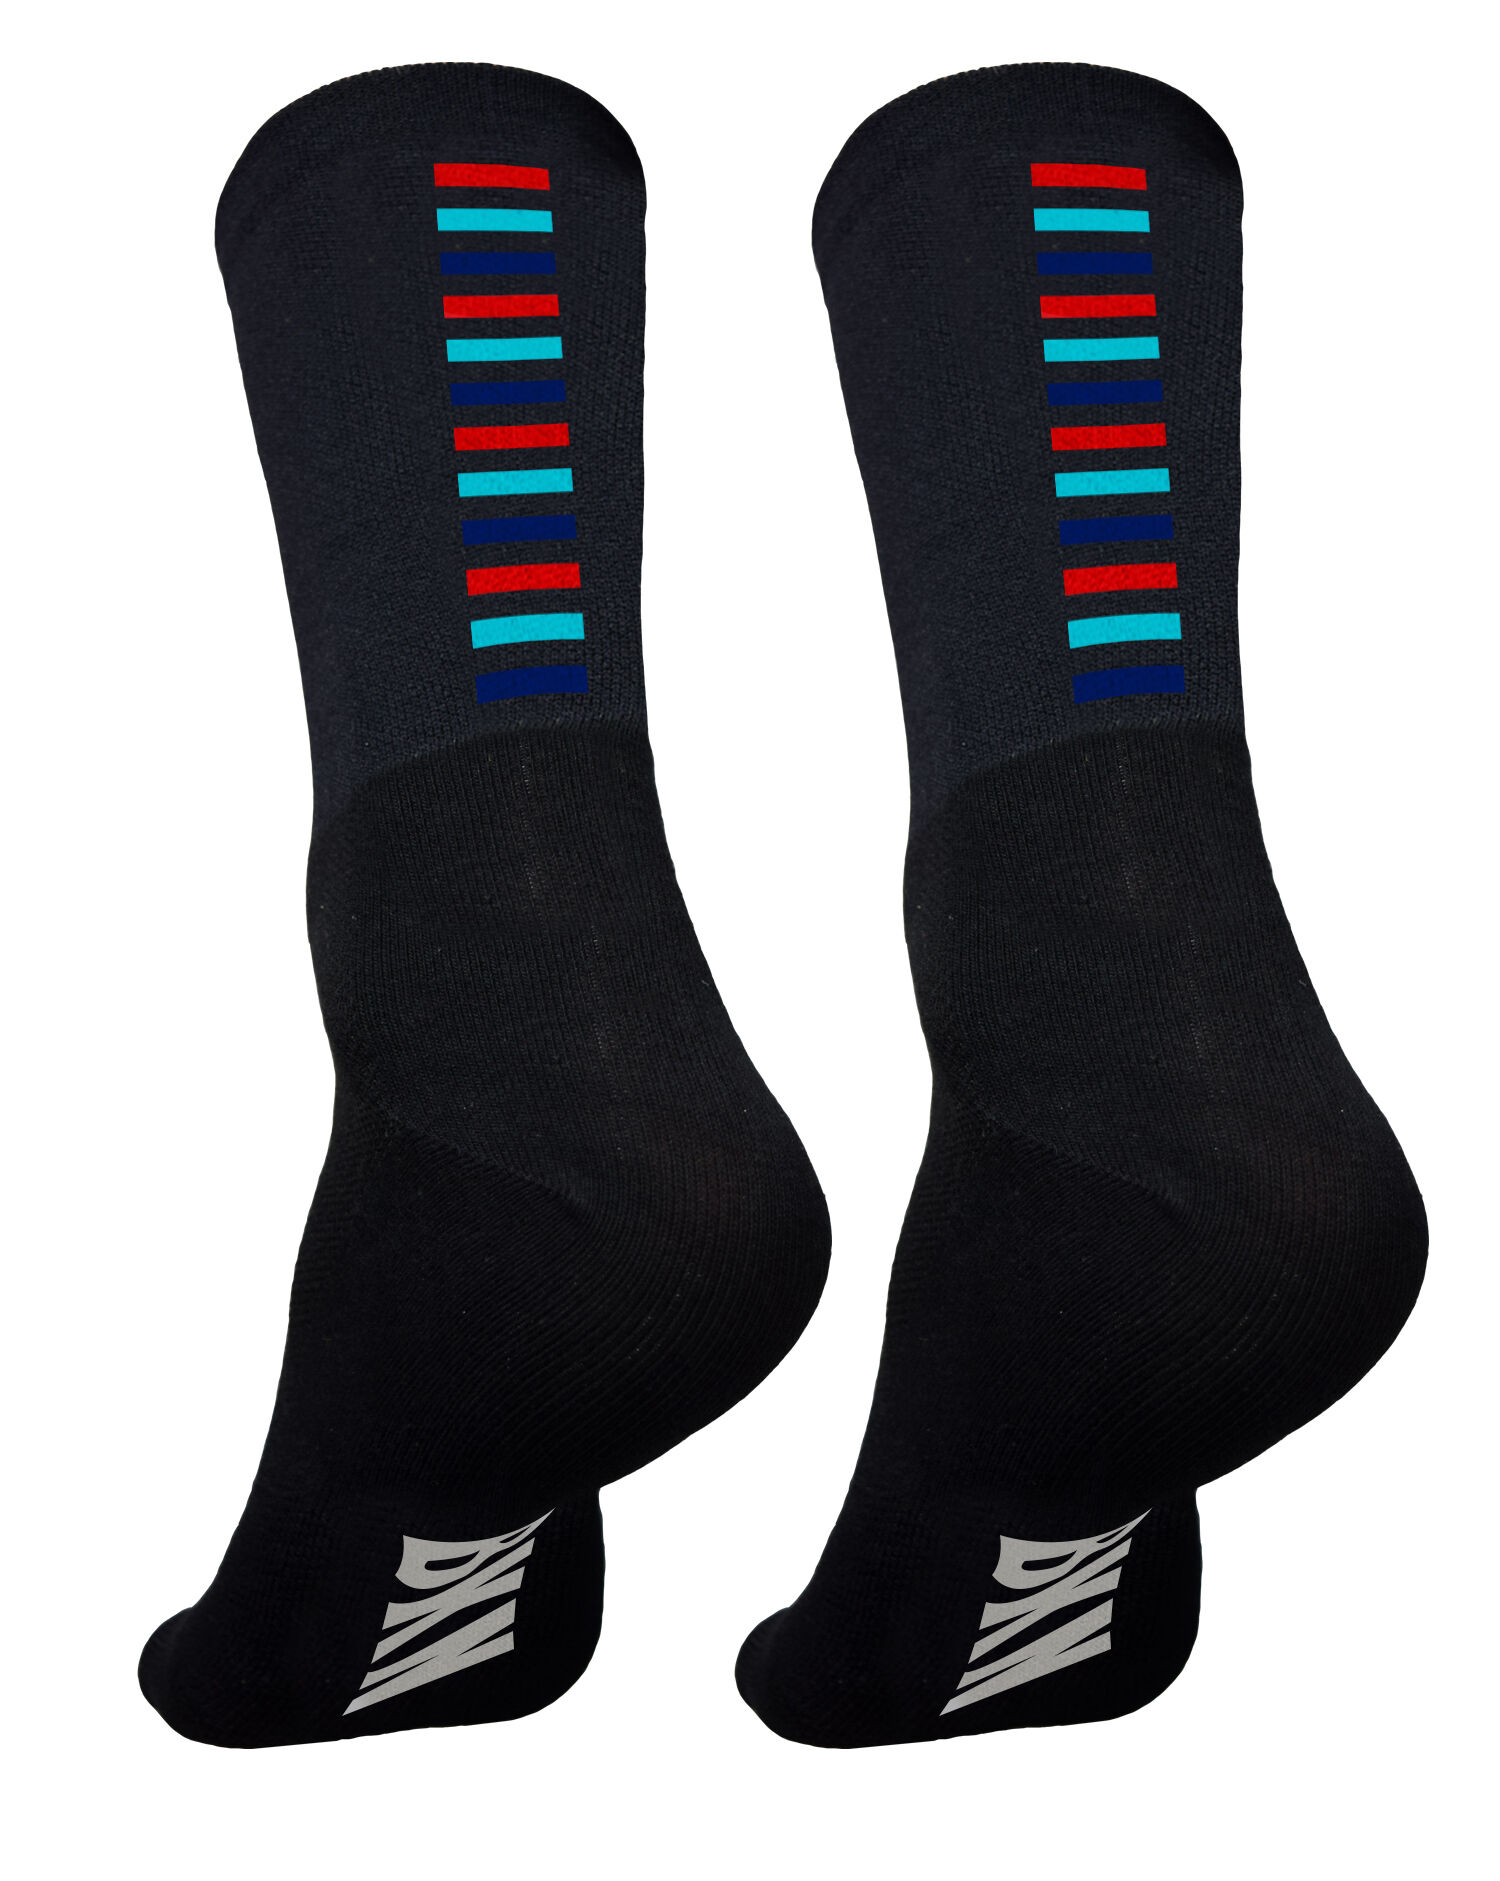 Black with 3 coloured steps-stripes